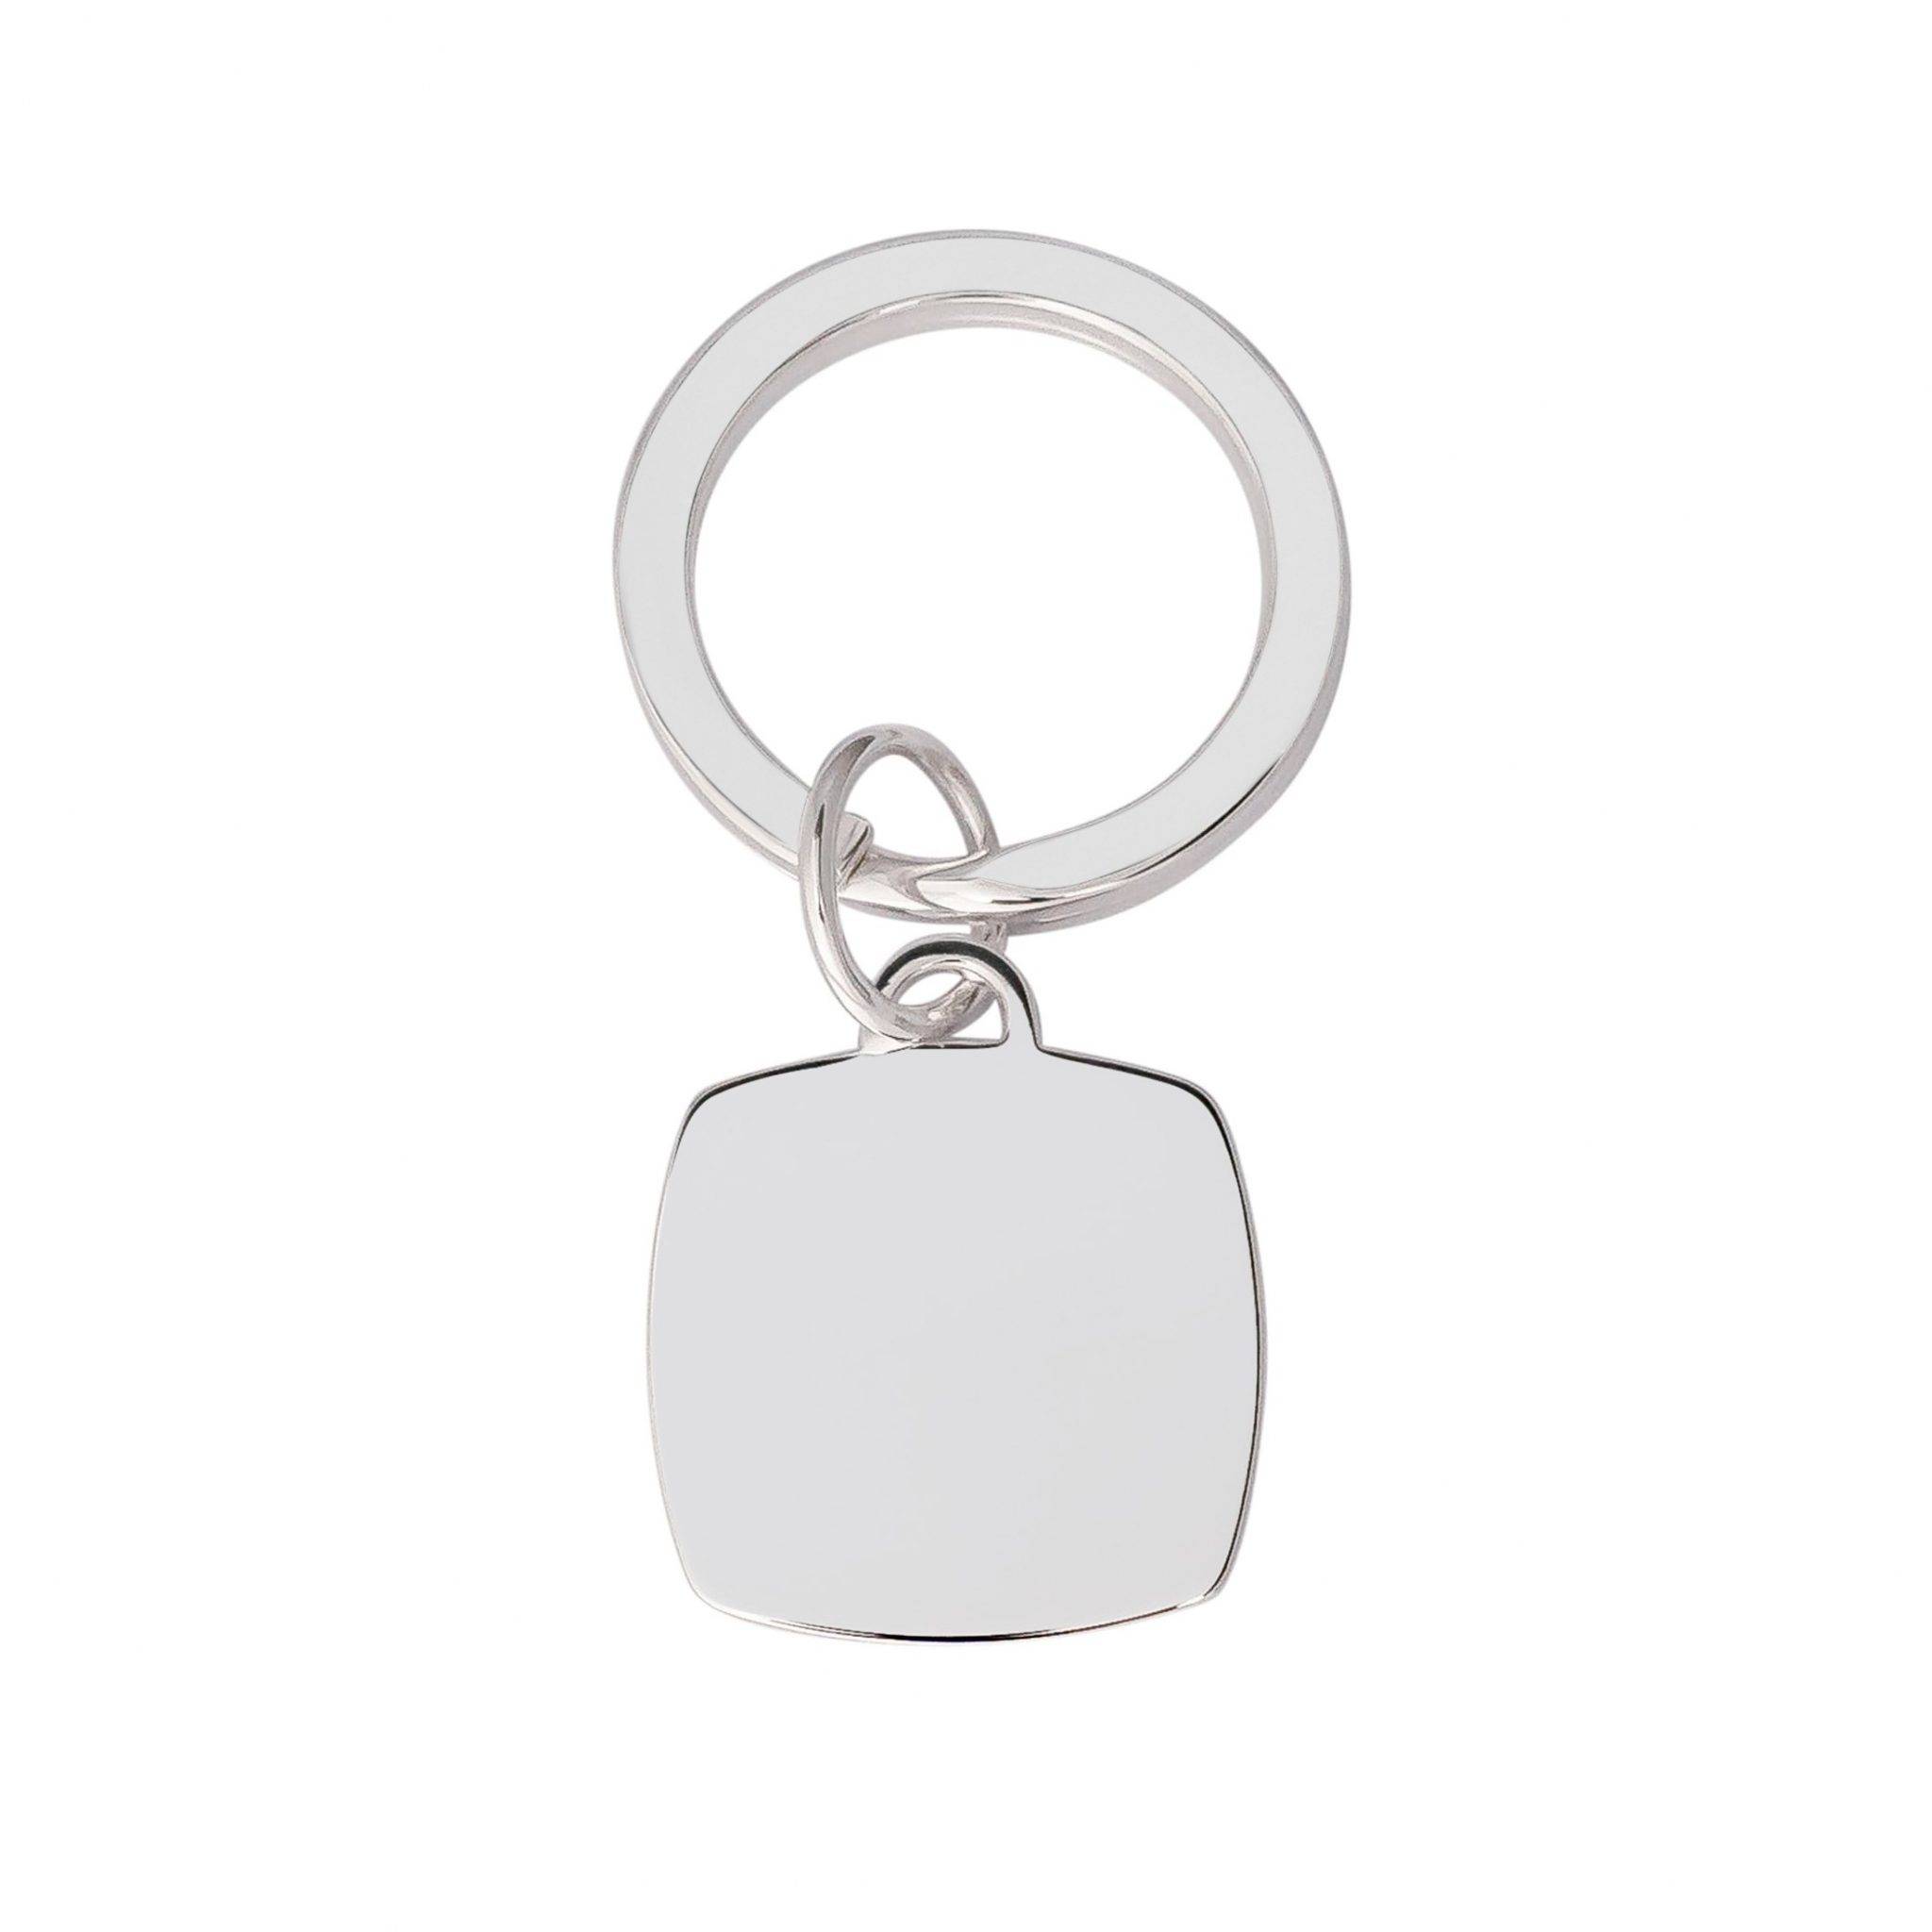 Shop Personalised Keyrings | Engraved Keychains Australia